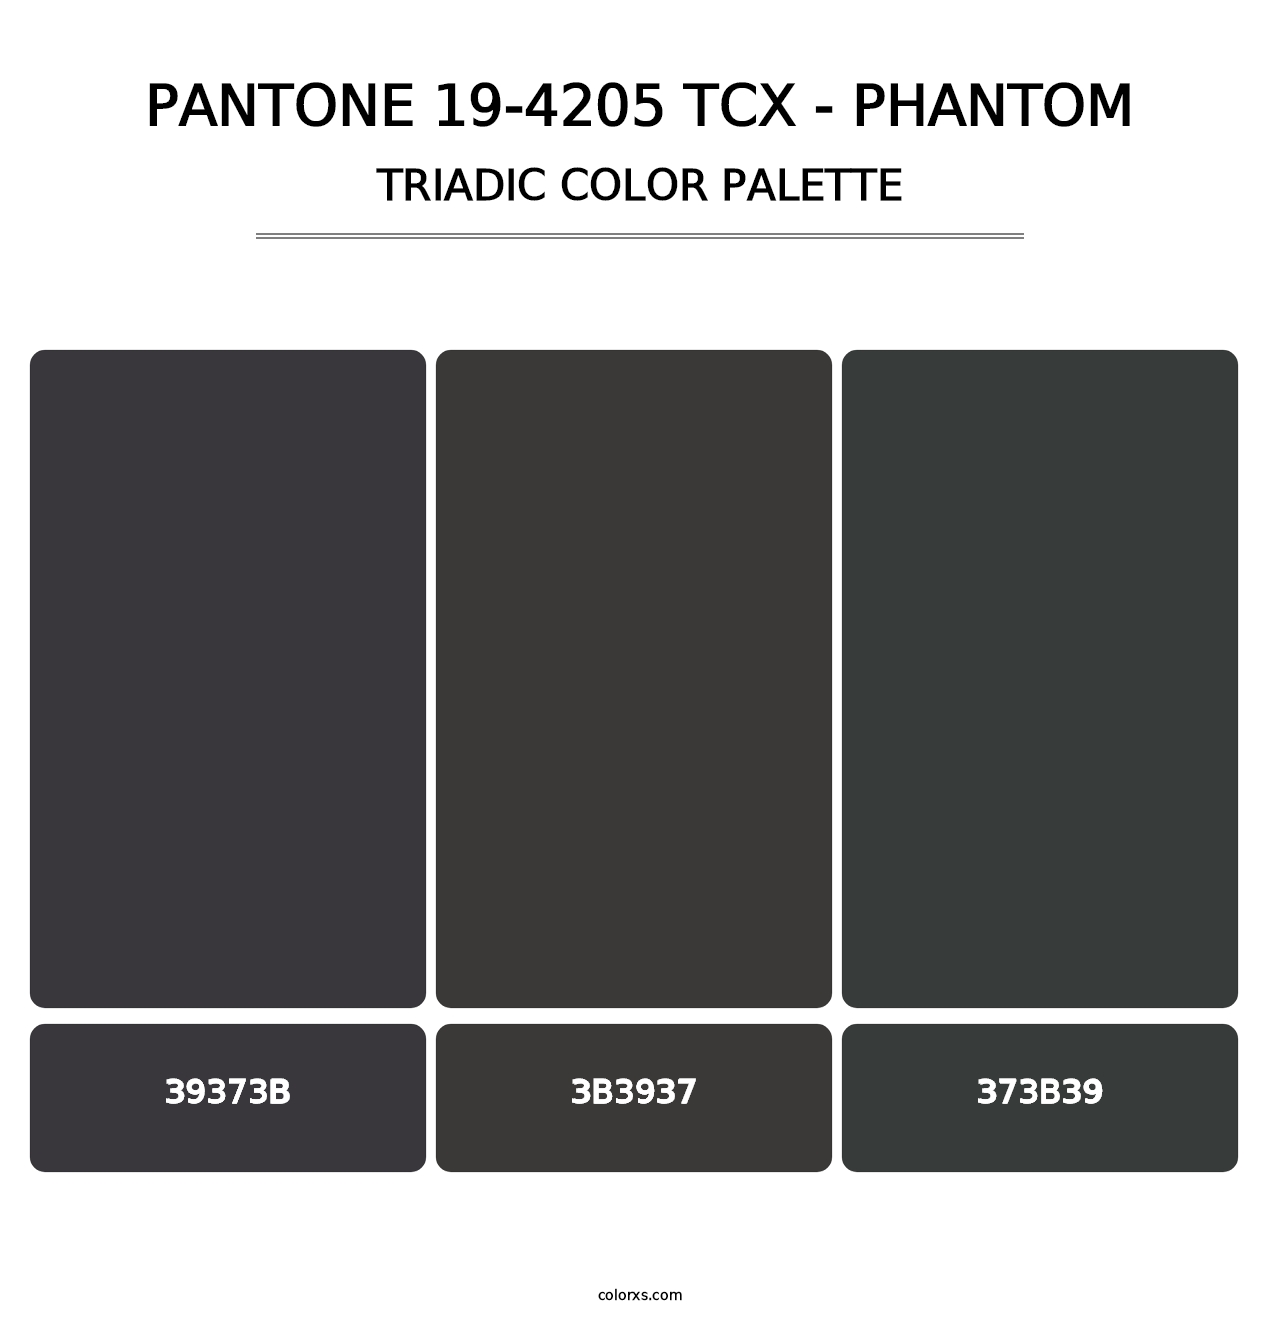 PANTONE 19-4205 TCX - Phantom - Triadic Color Palette